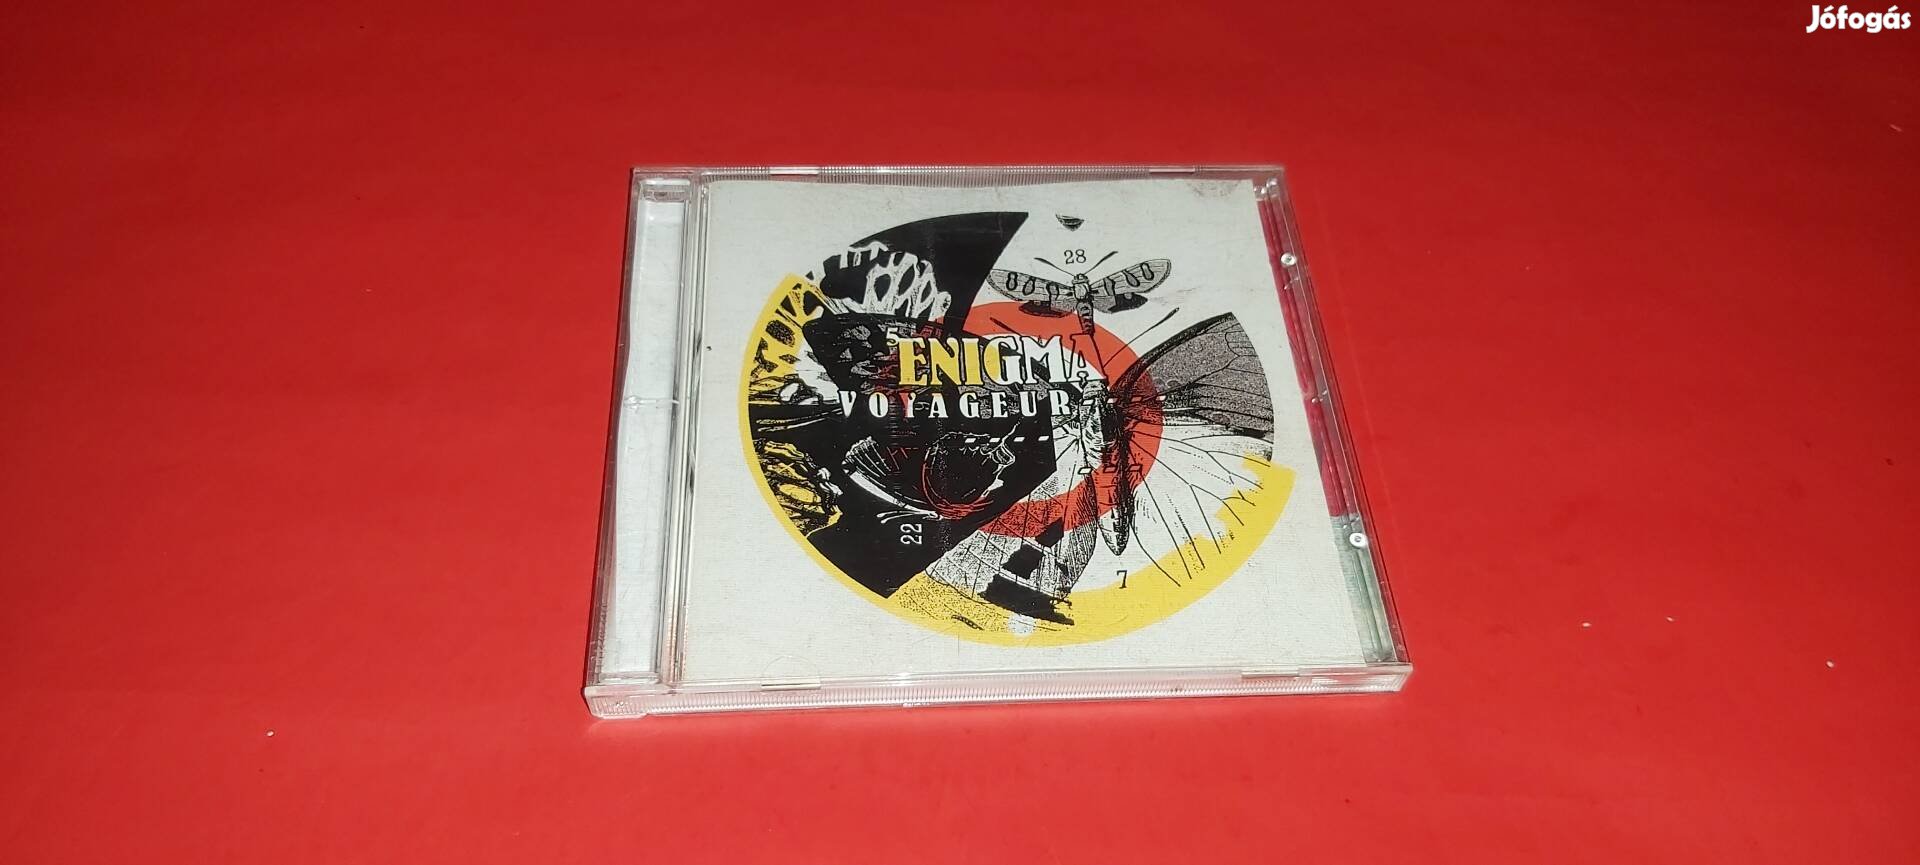 Enigma Voyageur Cd 2003